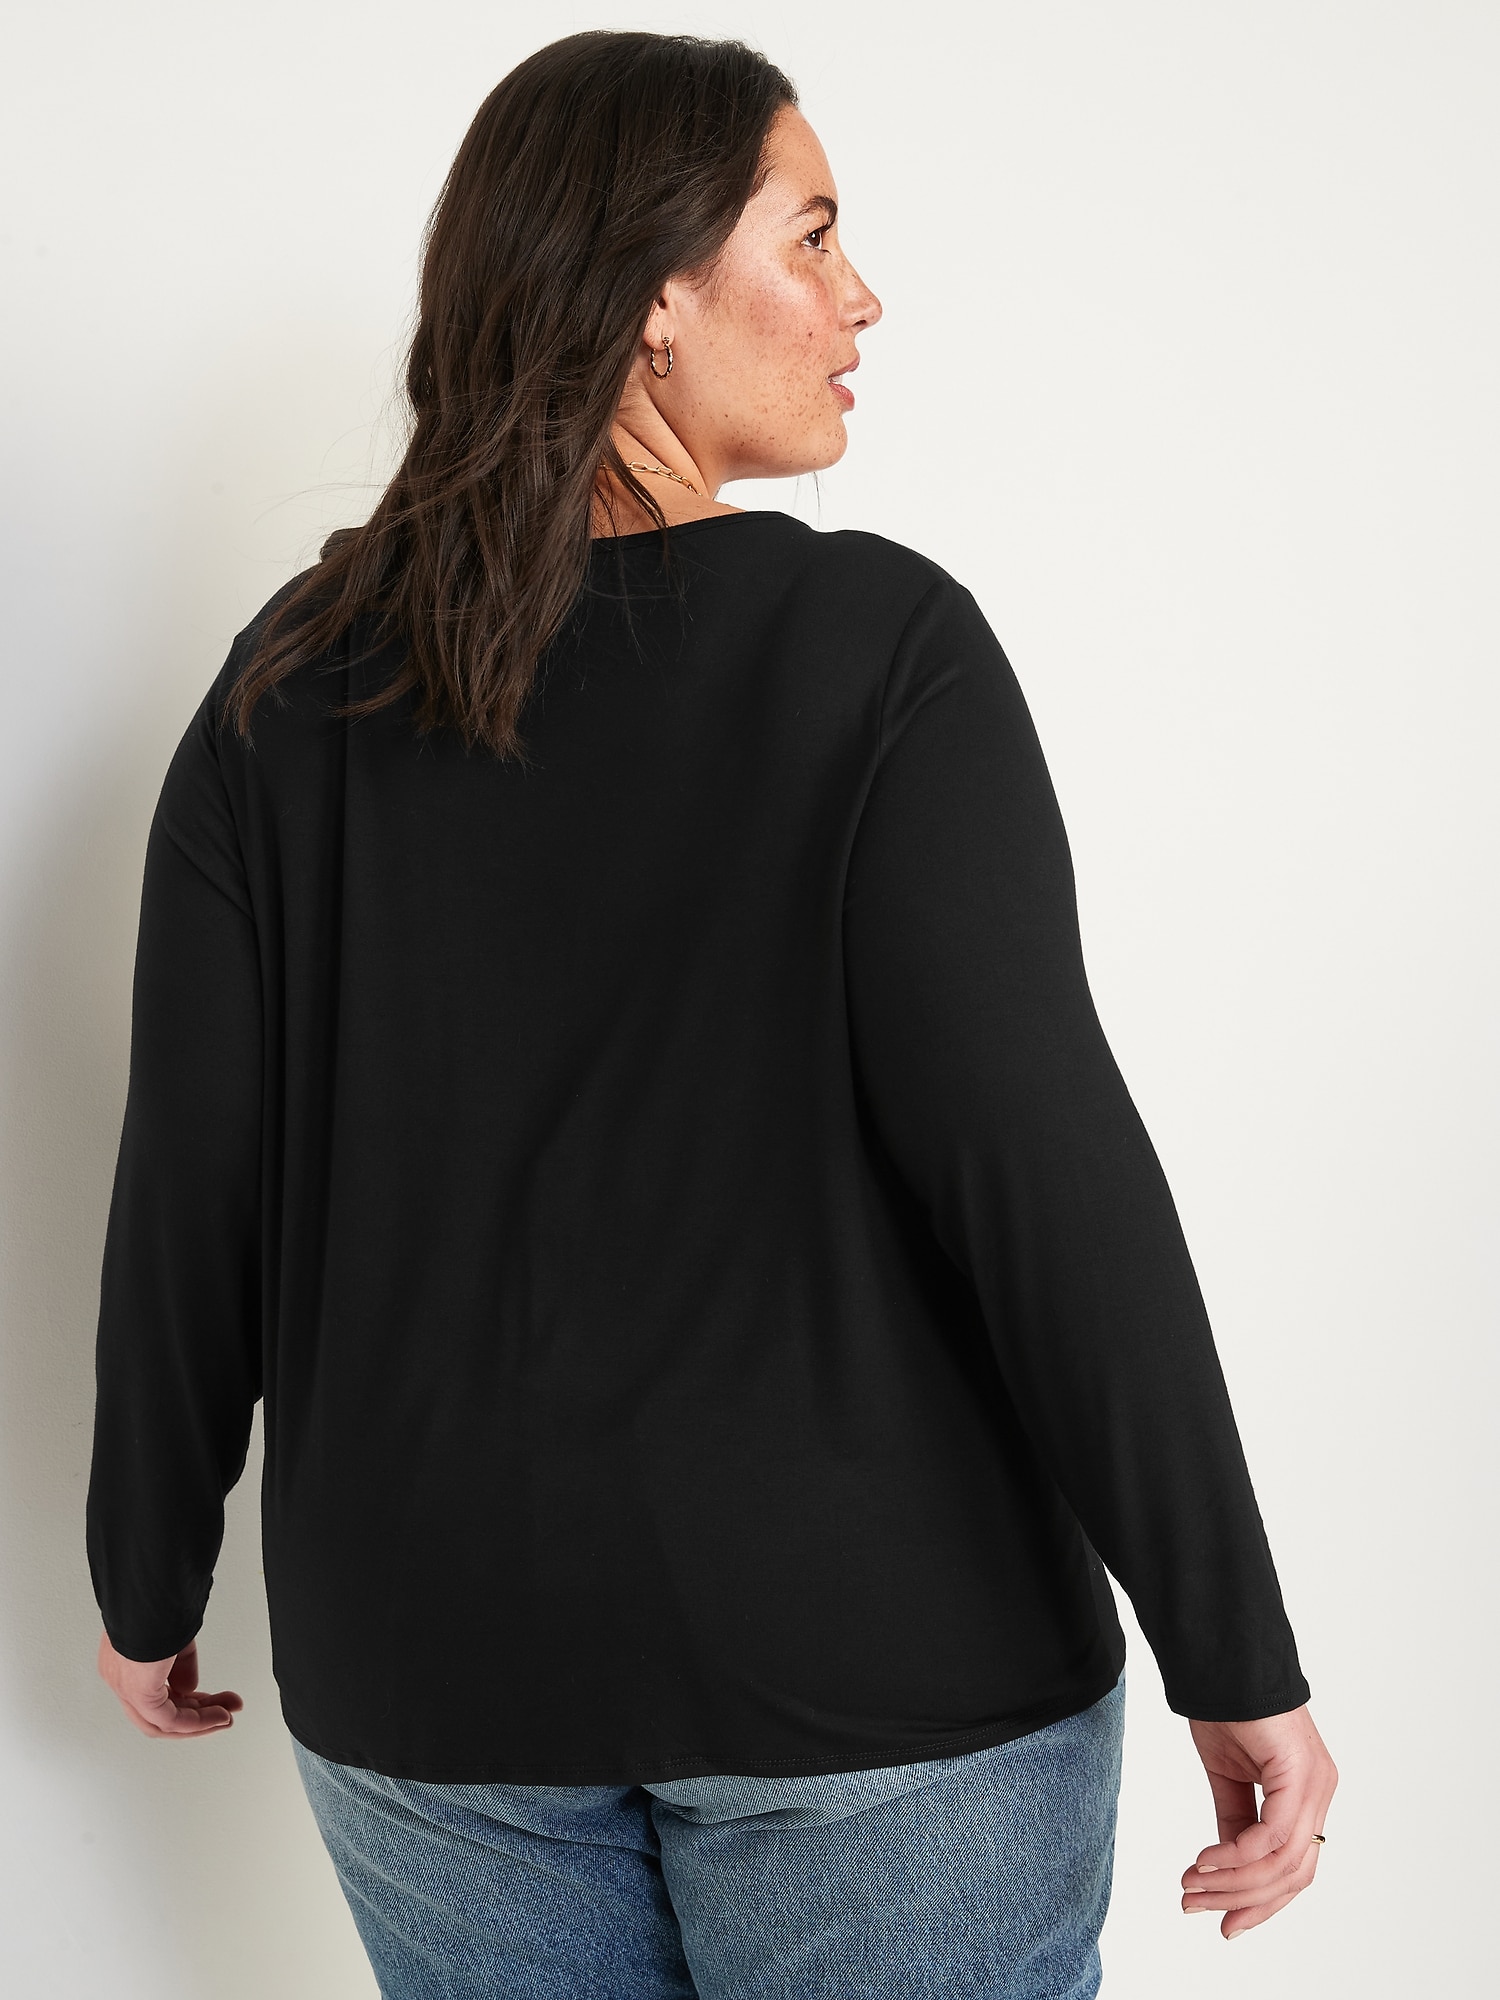 Luxe V-Neck Long-Sleeve T-Shirt for Women | Old Navy